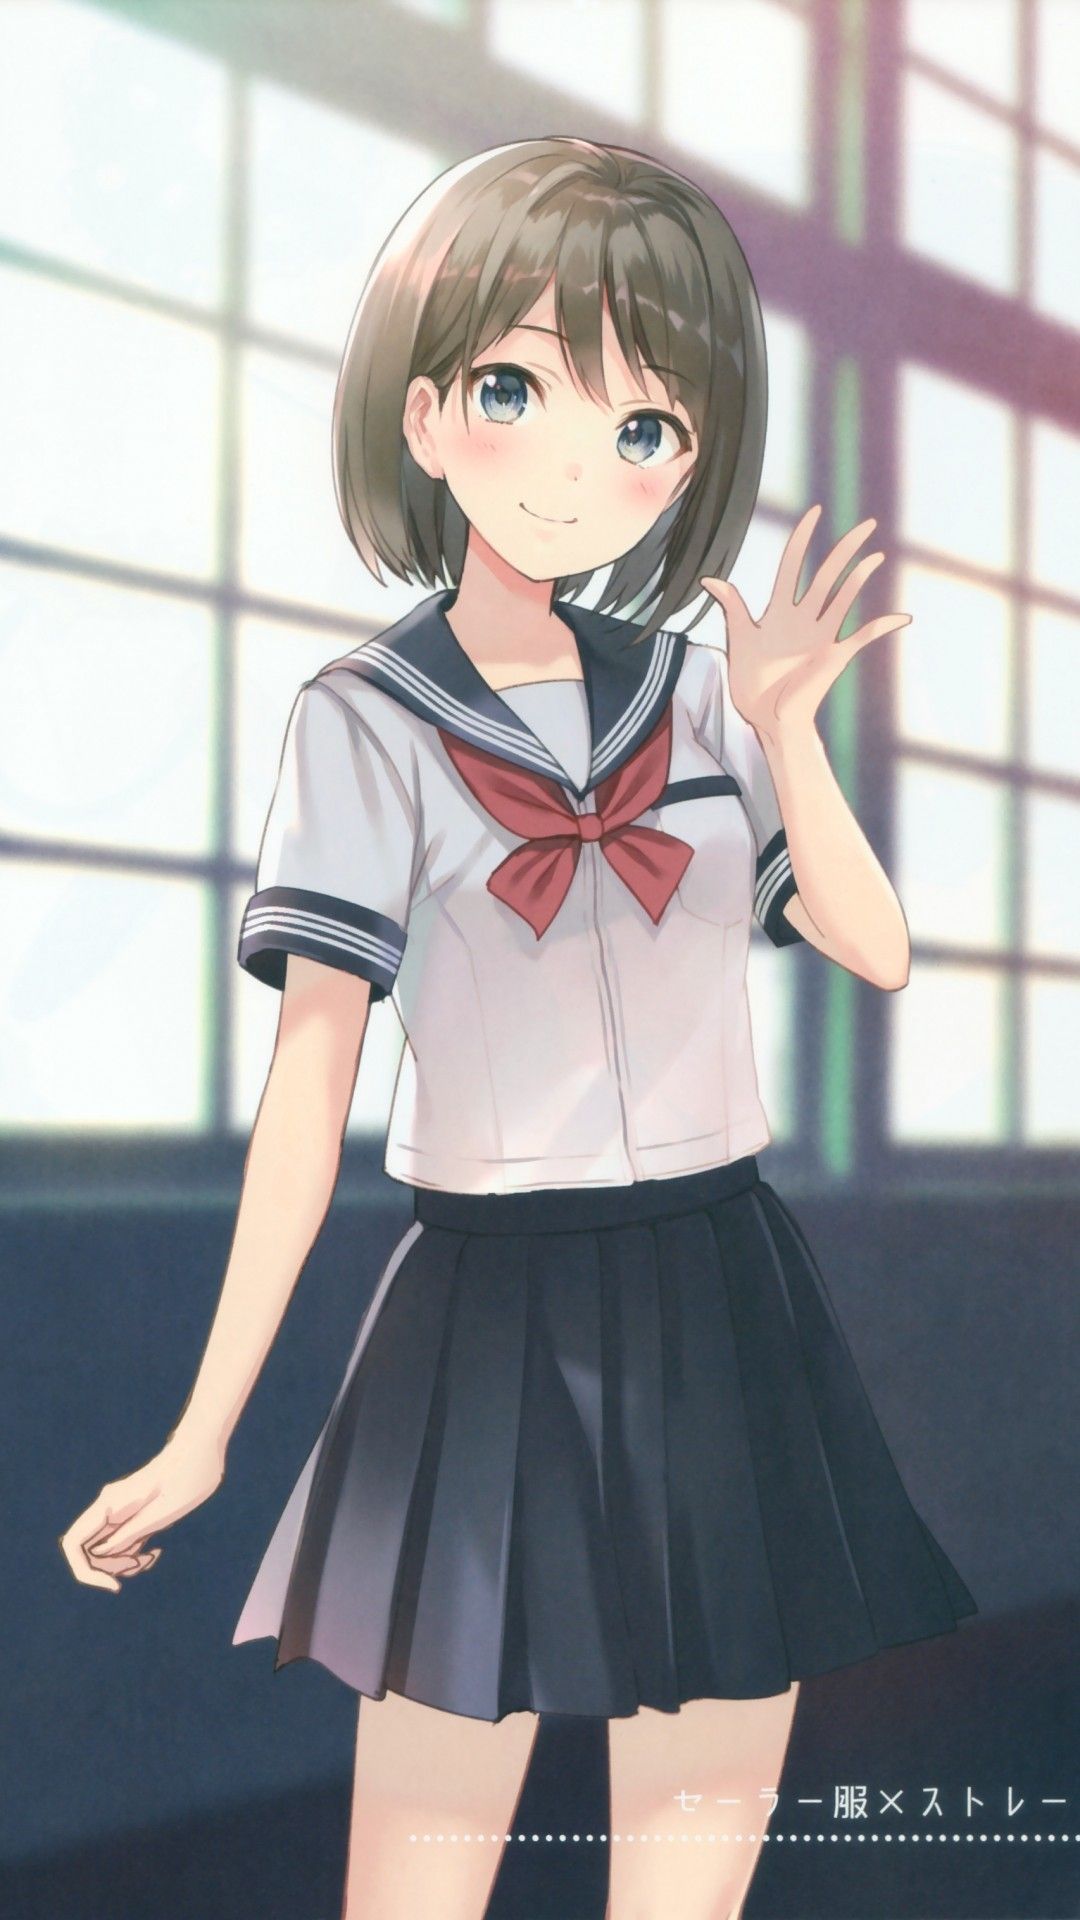 Download 1080x1920 Anime Girl, School Uniform, Smiling Wallpaper